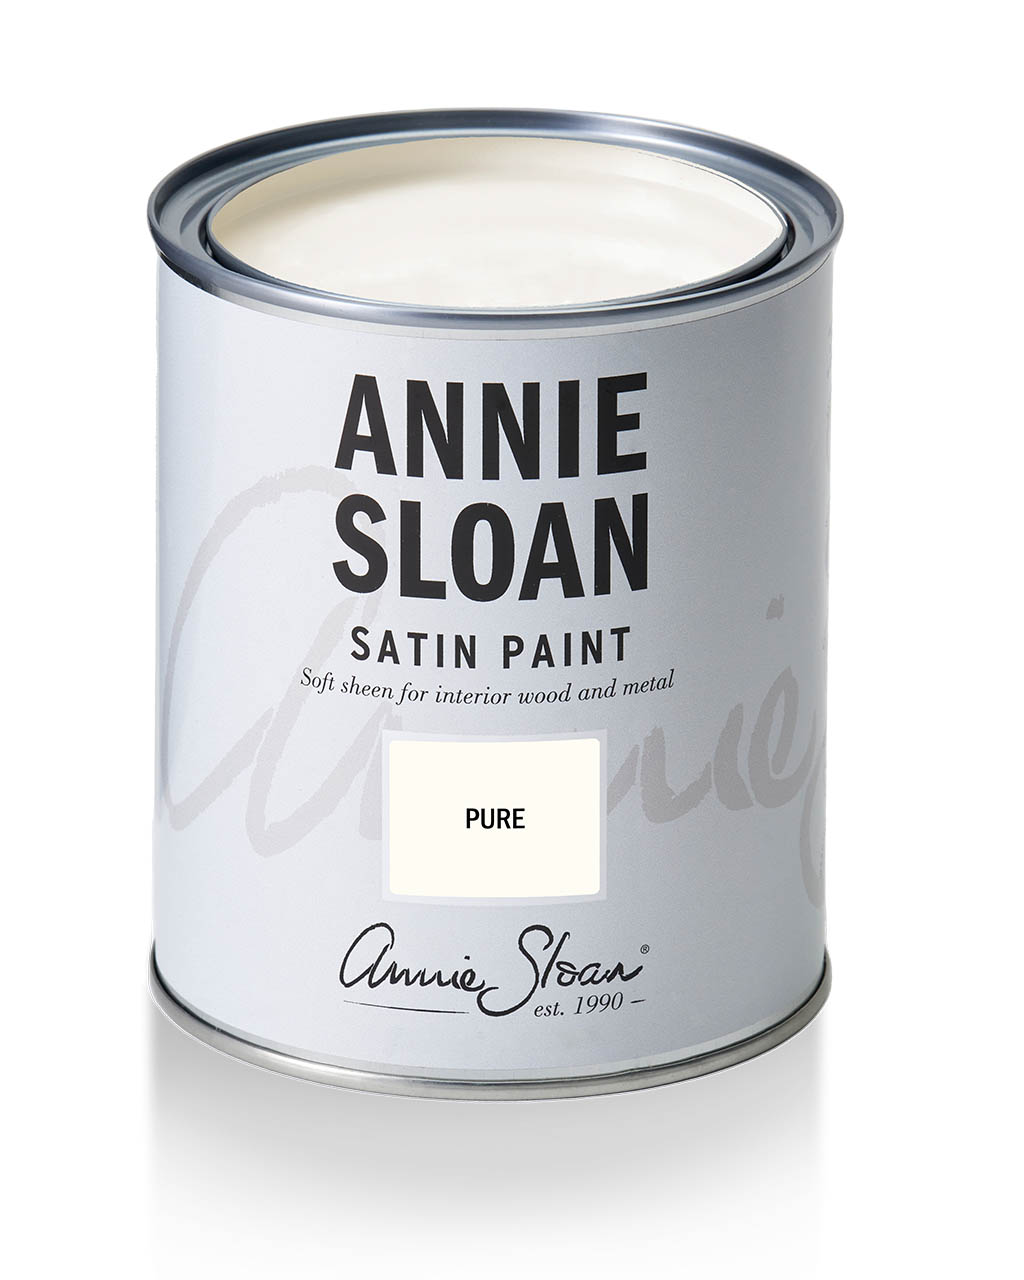 Pure Satin Paint by Annie Sloan - tin shot